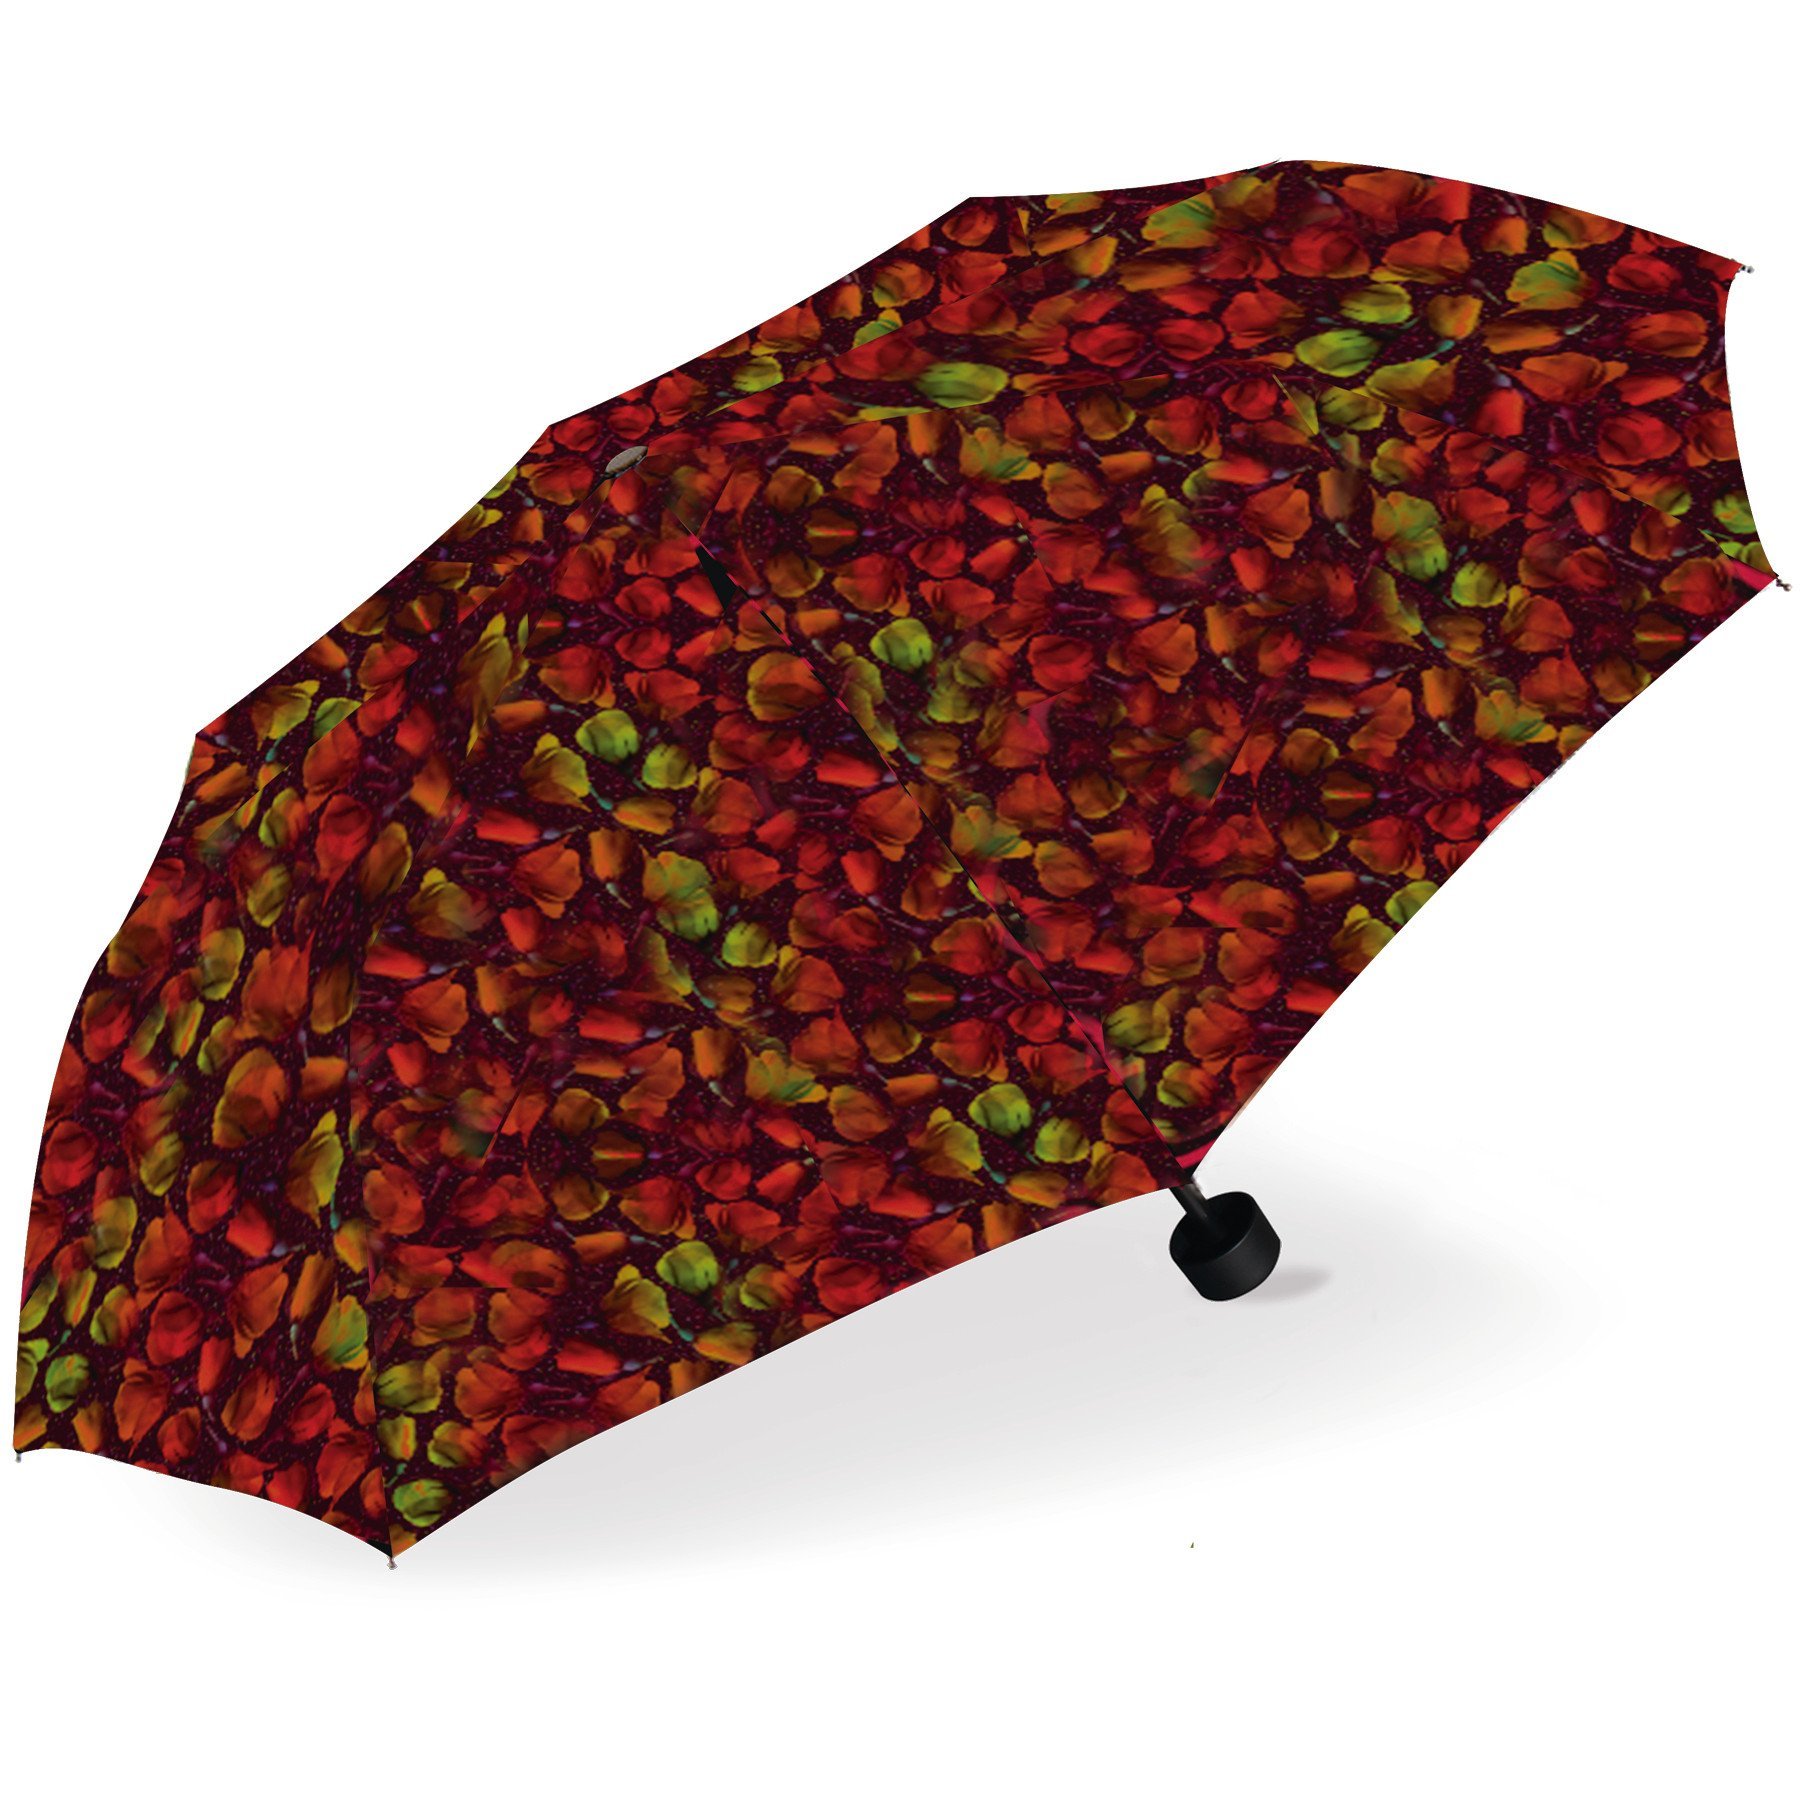 Paraguas Plegable Mini Devota & Lomba diseño Blossom Fade- Rojo - Paraguas Devota Lomba, Paraguas Originales, Paraguas plegable Mujer, Paraguas plegables originales - Que puedo Regalar